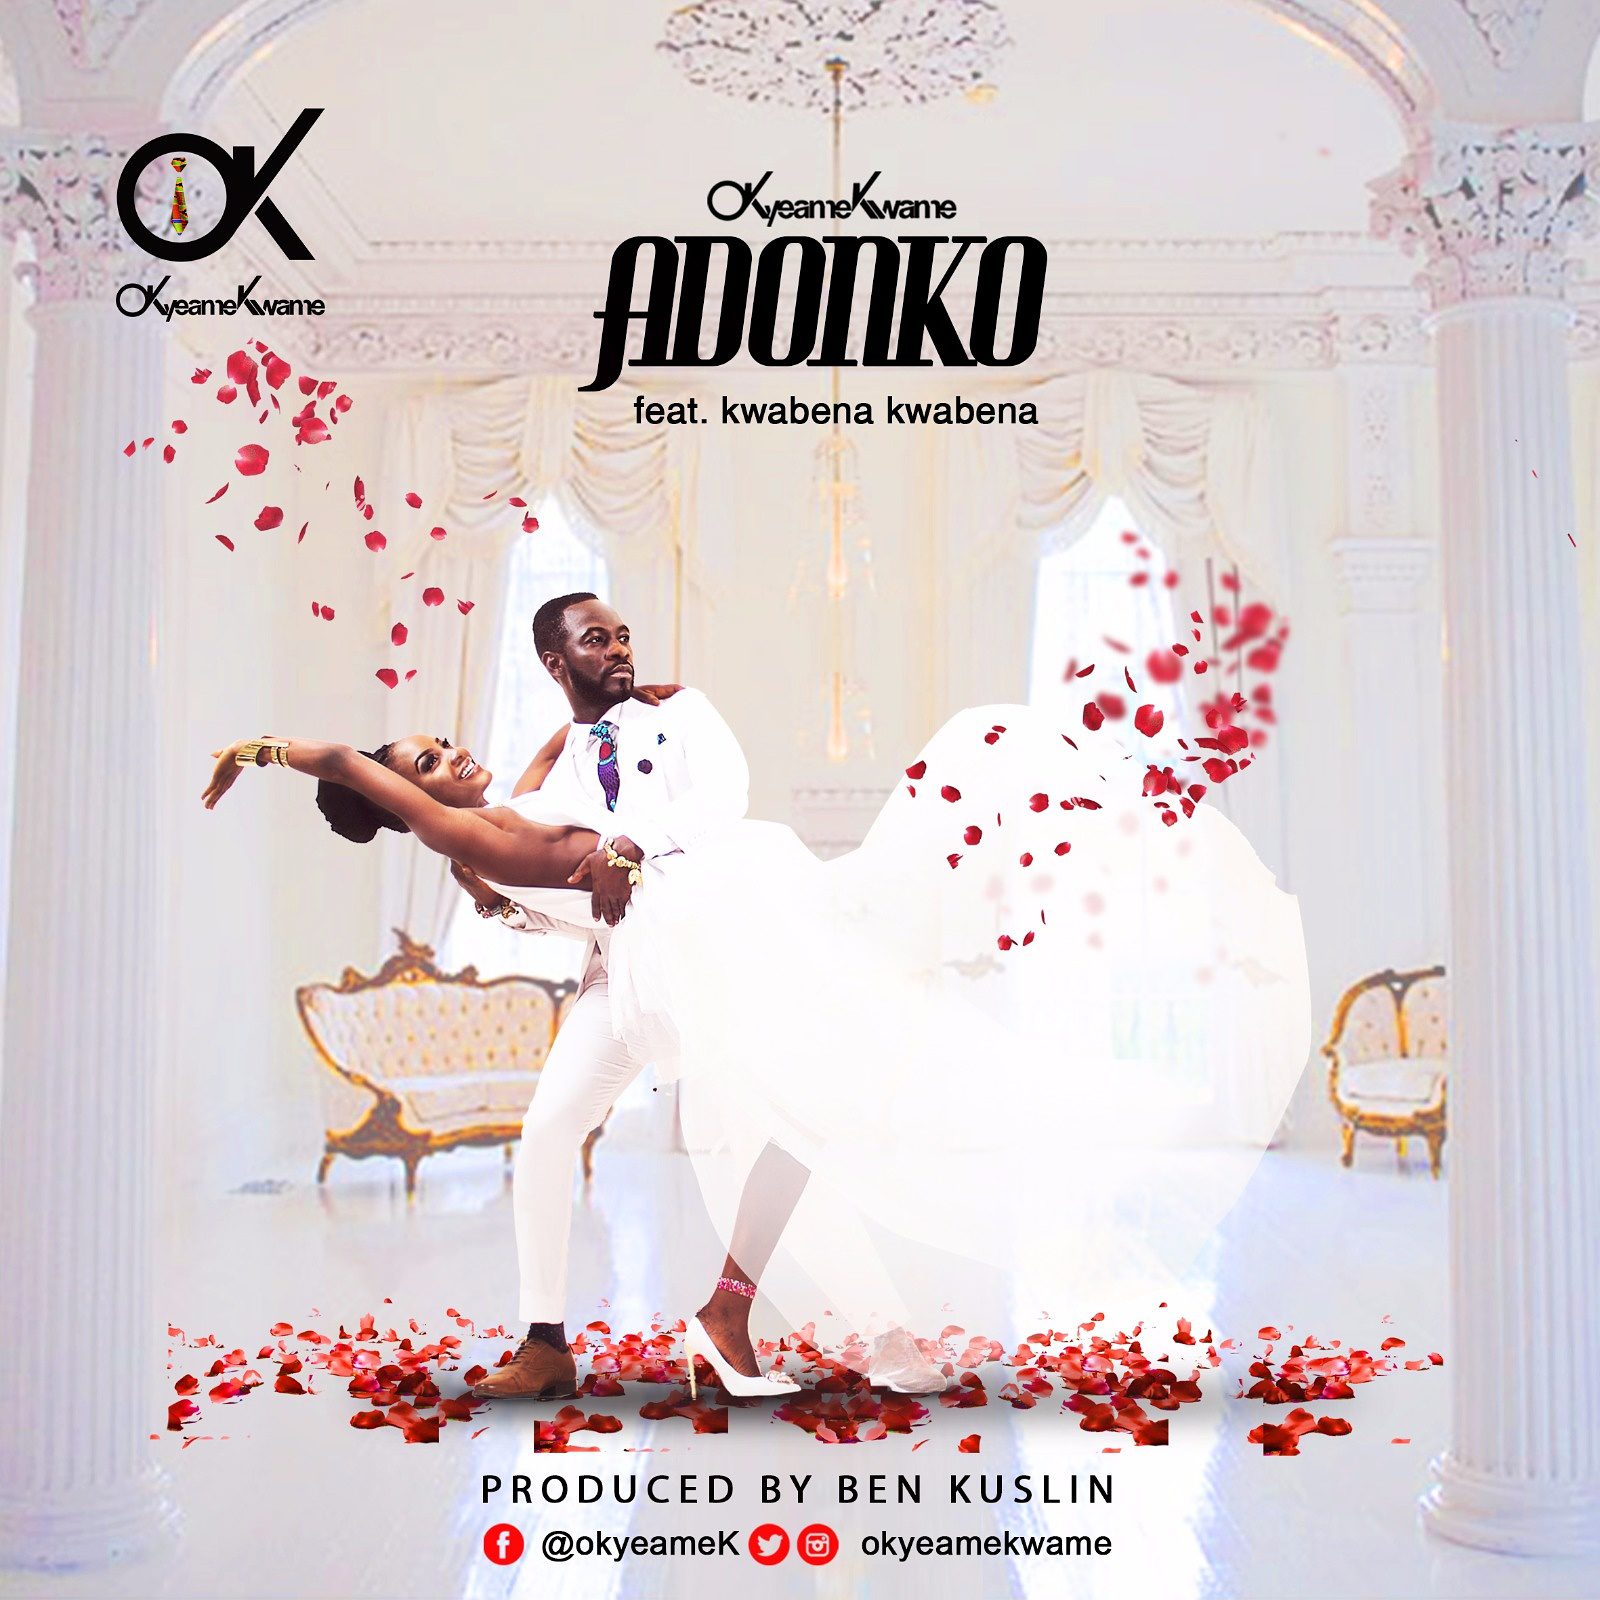 A Must-Listen: Okyeame Kwame Collaborates with Kwabena Kwabena on a Masterpiece, “Adonko”